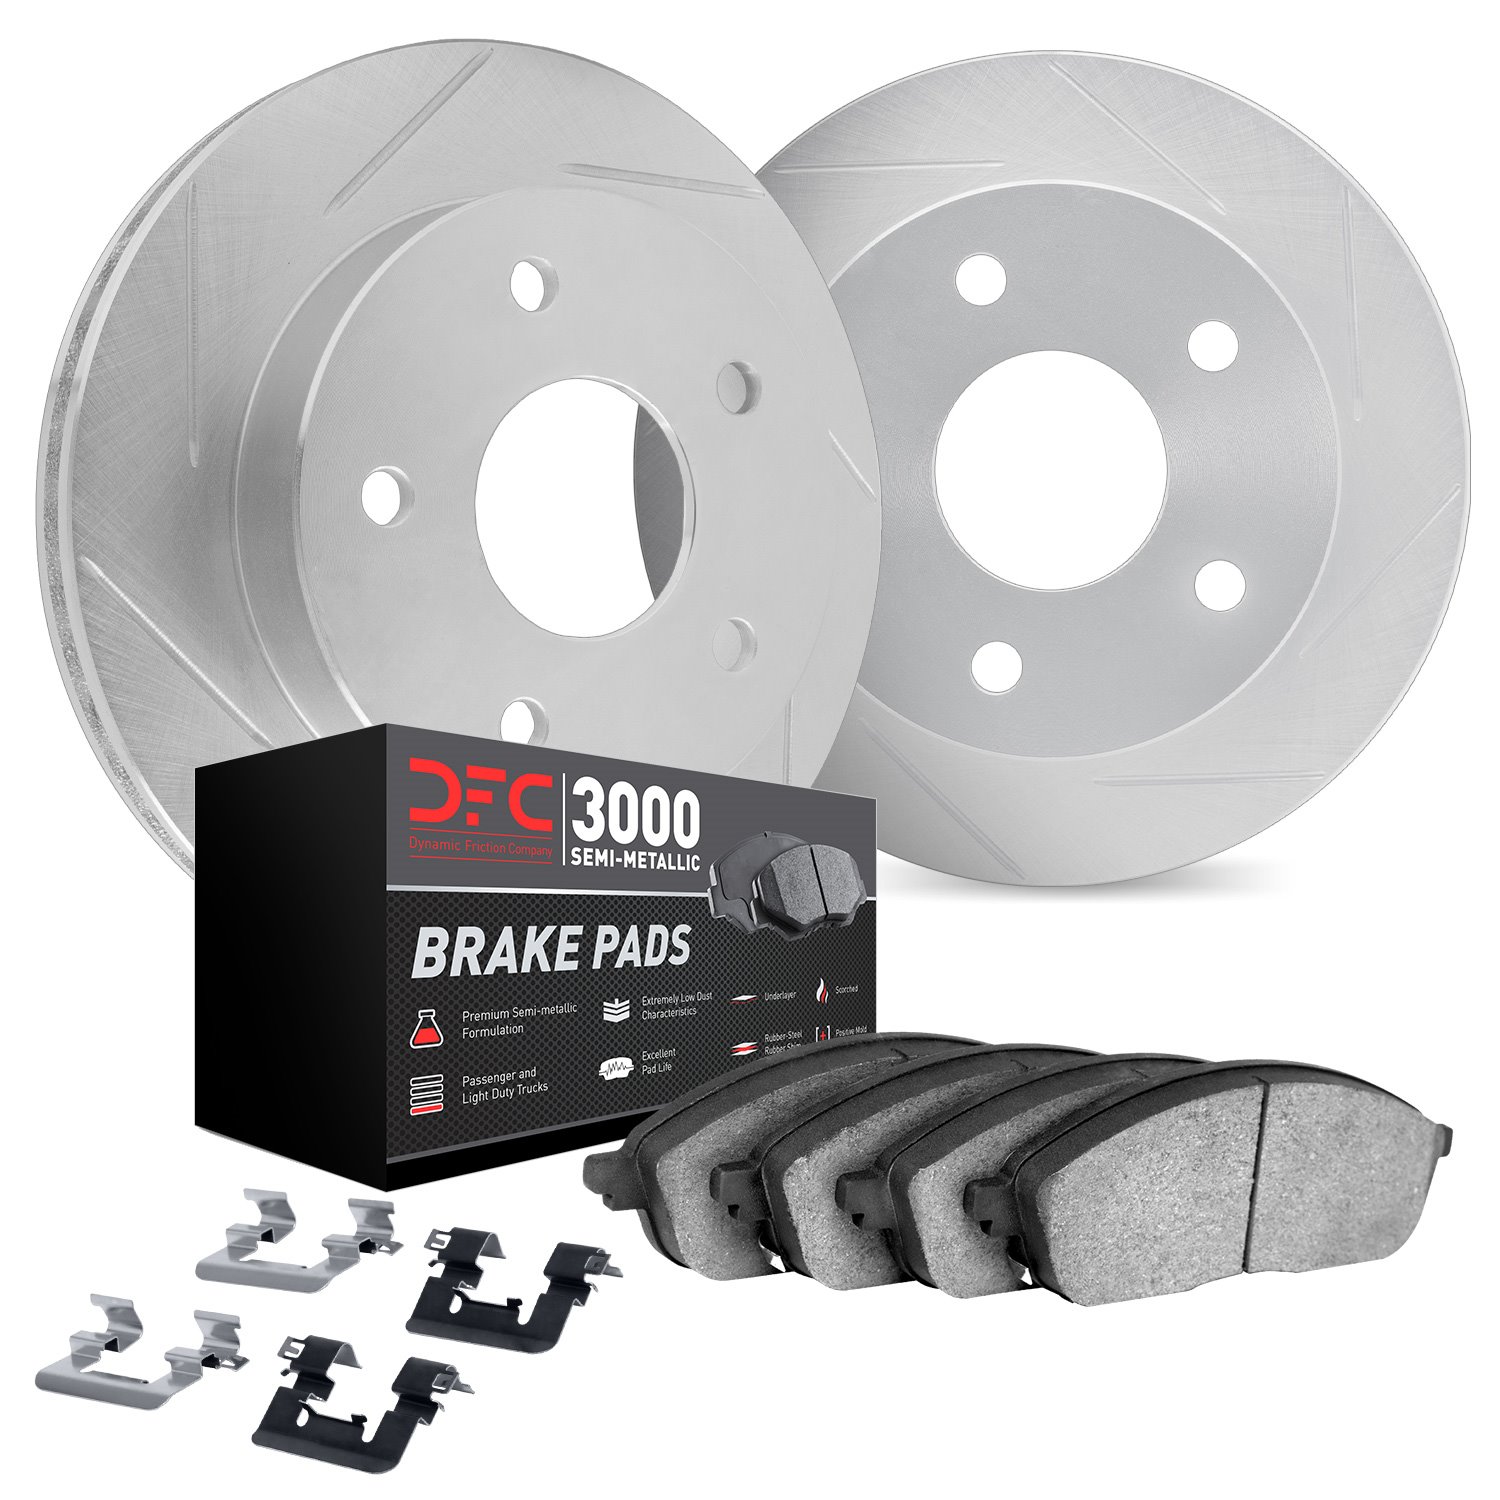 5112-76161 Slotted Brake Rotors with 3000-Series Semi-Metallic Brake Pads Kit & Hardware [Silver], Fits Select Lexus/Toyota/Scio